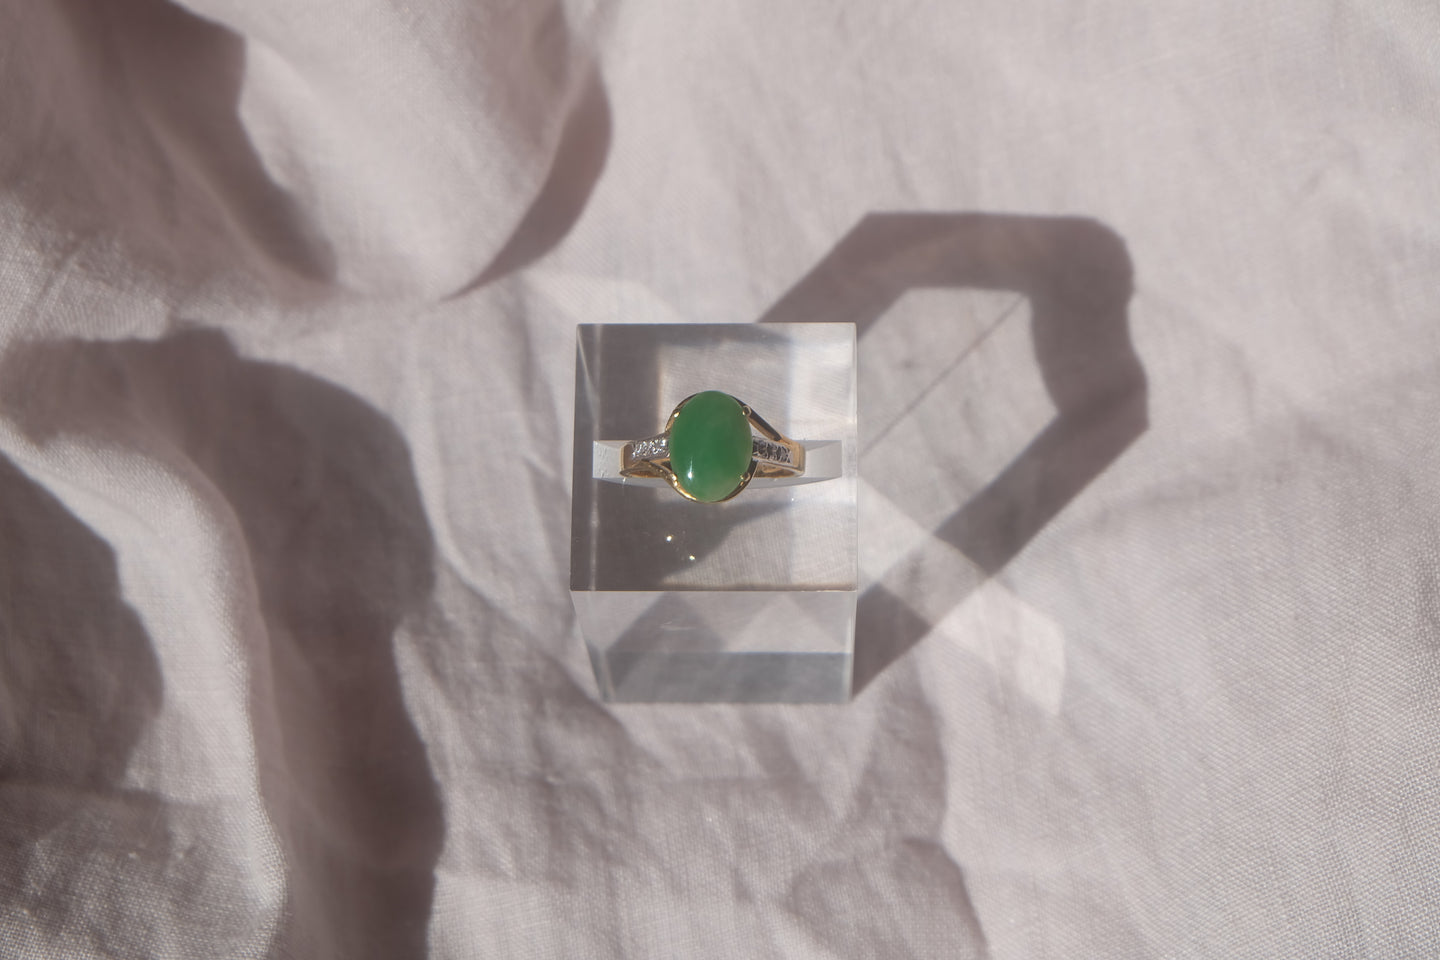 Oval Jadeite Diamond Ring